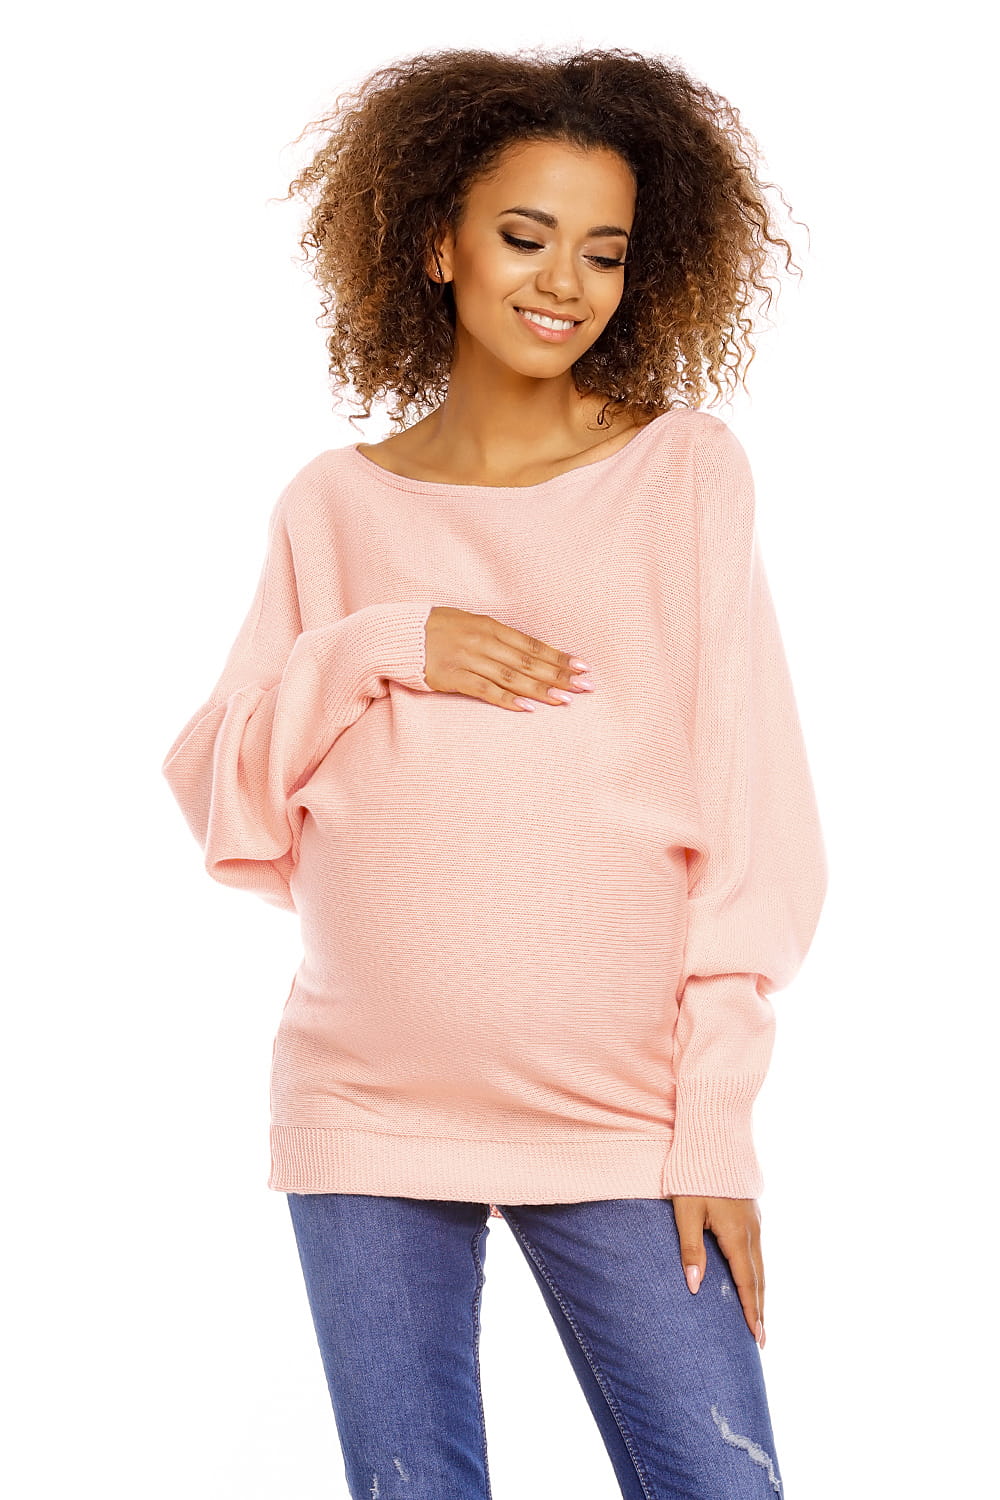 Pregnancy sweater model 178638..